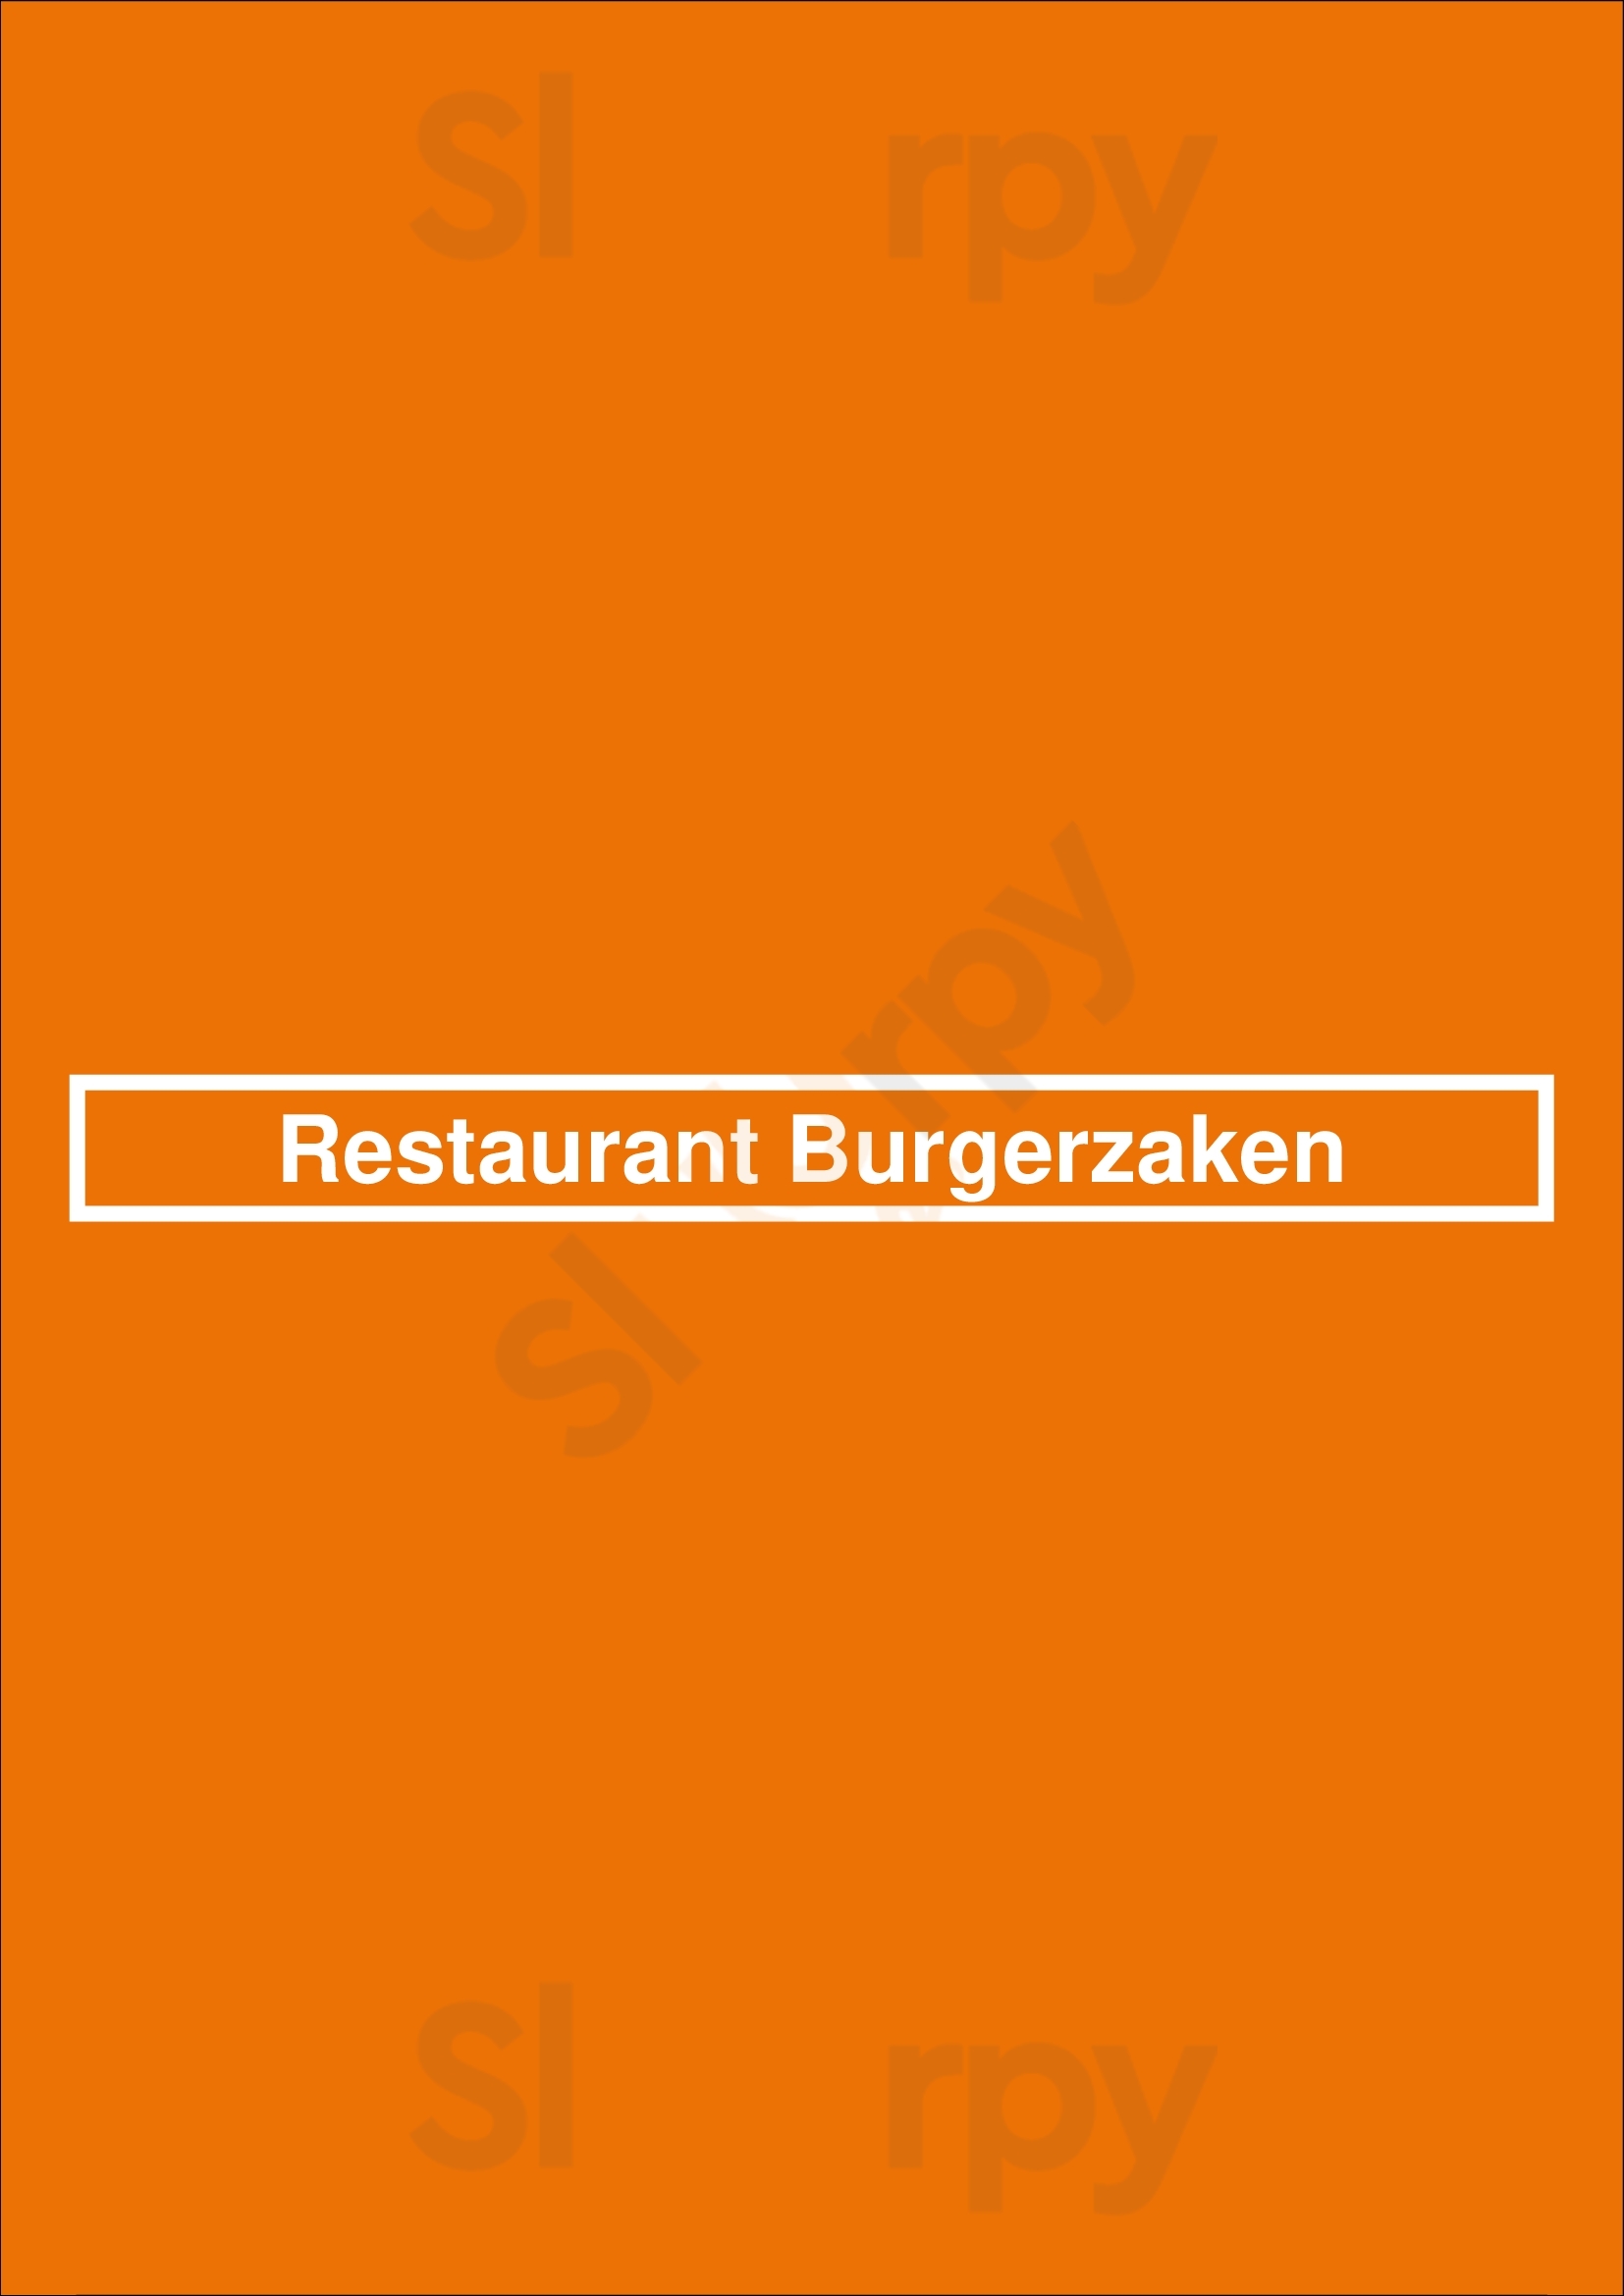 Restaurant Burgerzaken Leiden Menu - 1